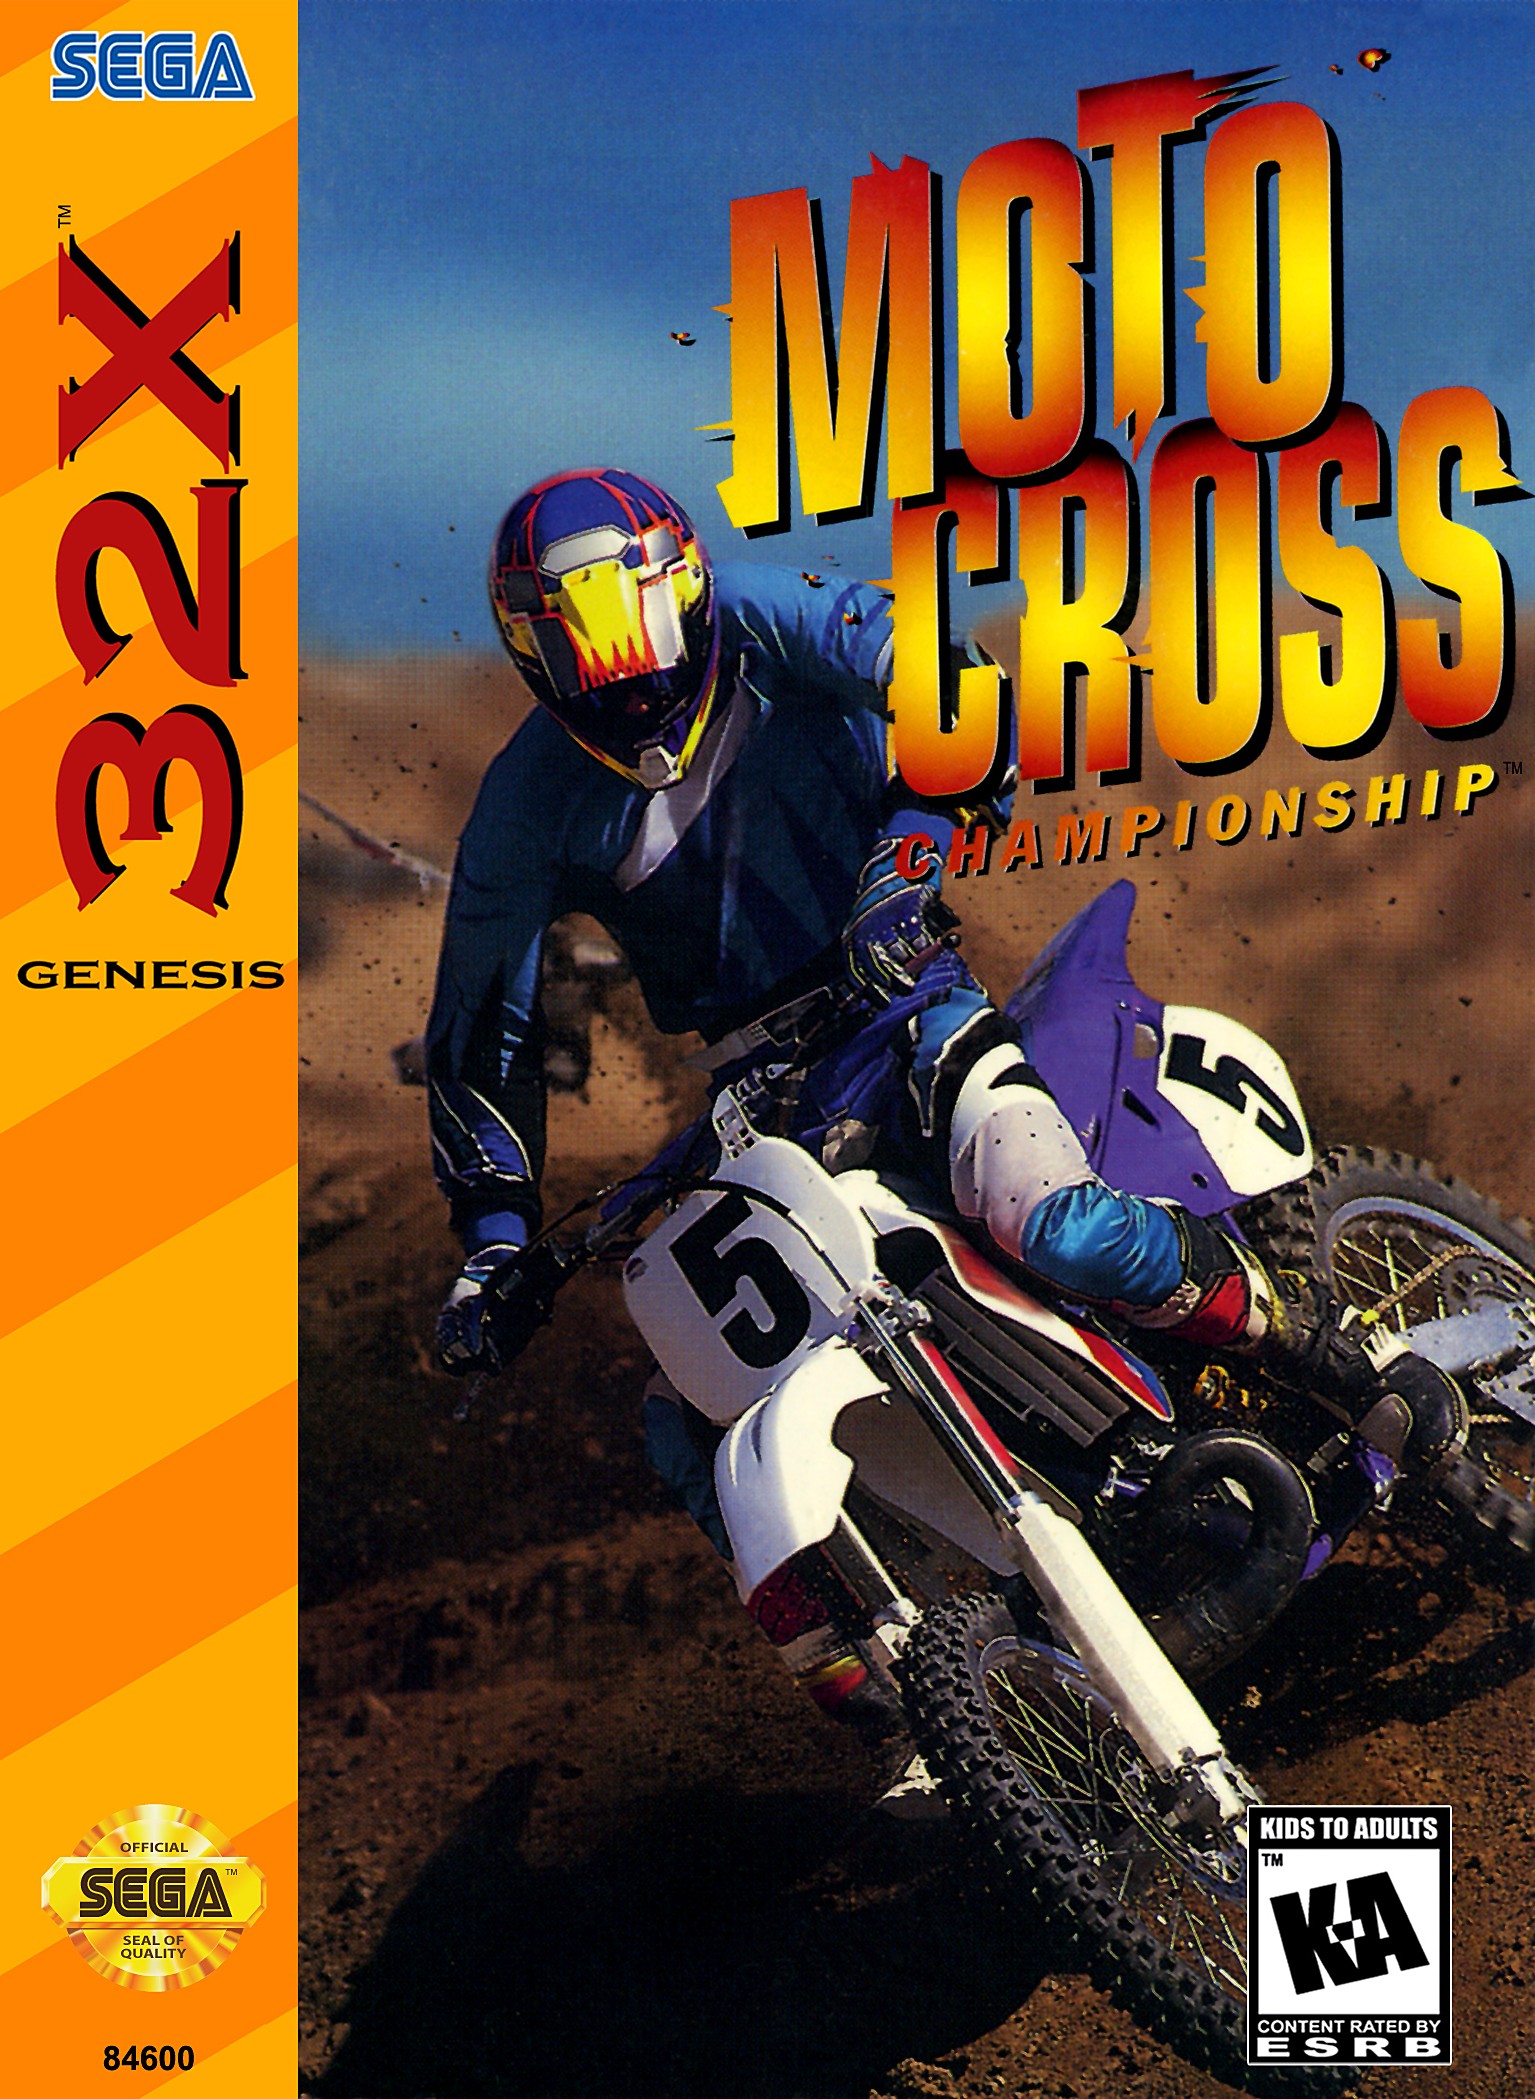 'Moto Cross: Championship'